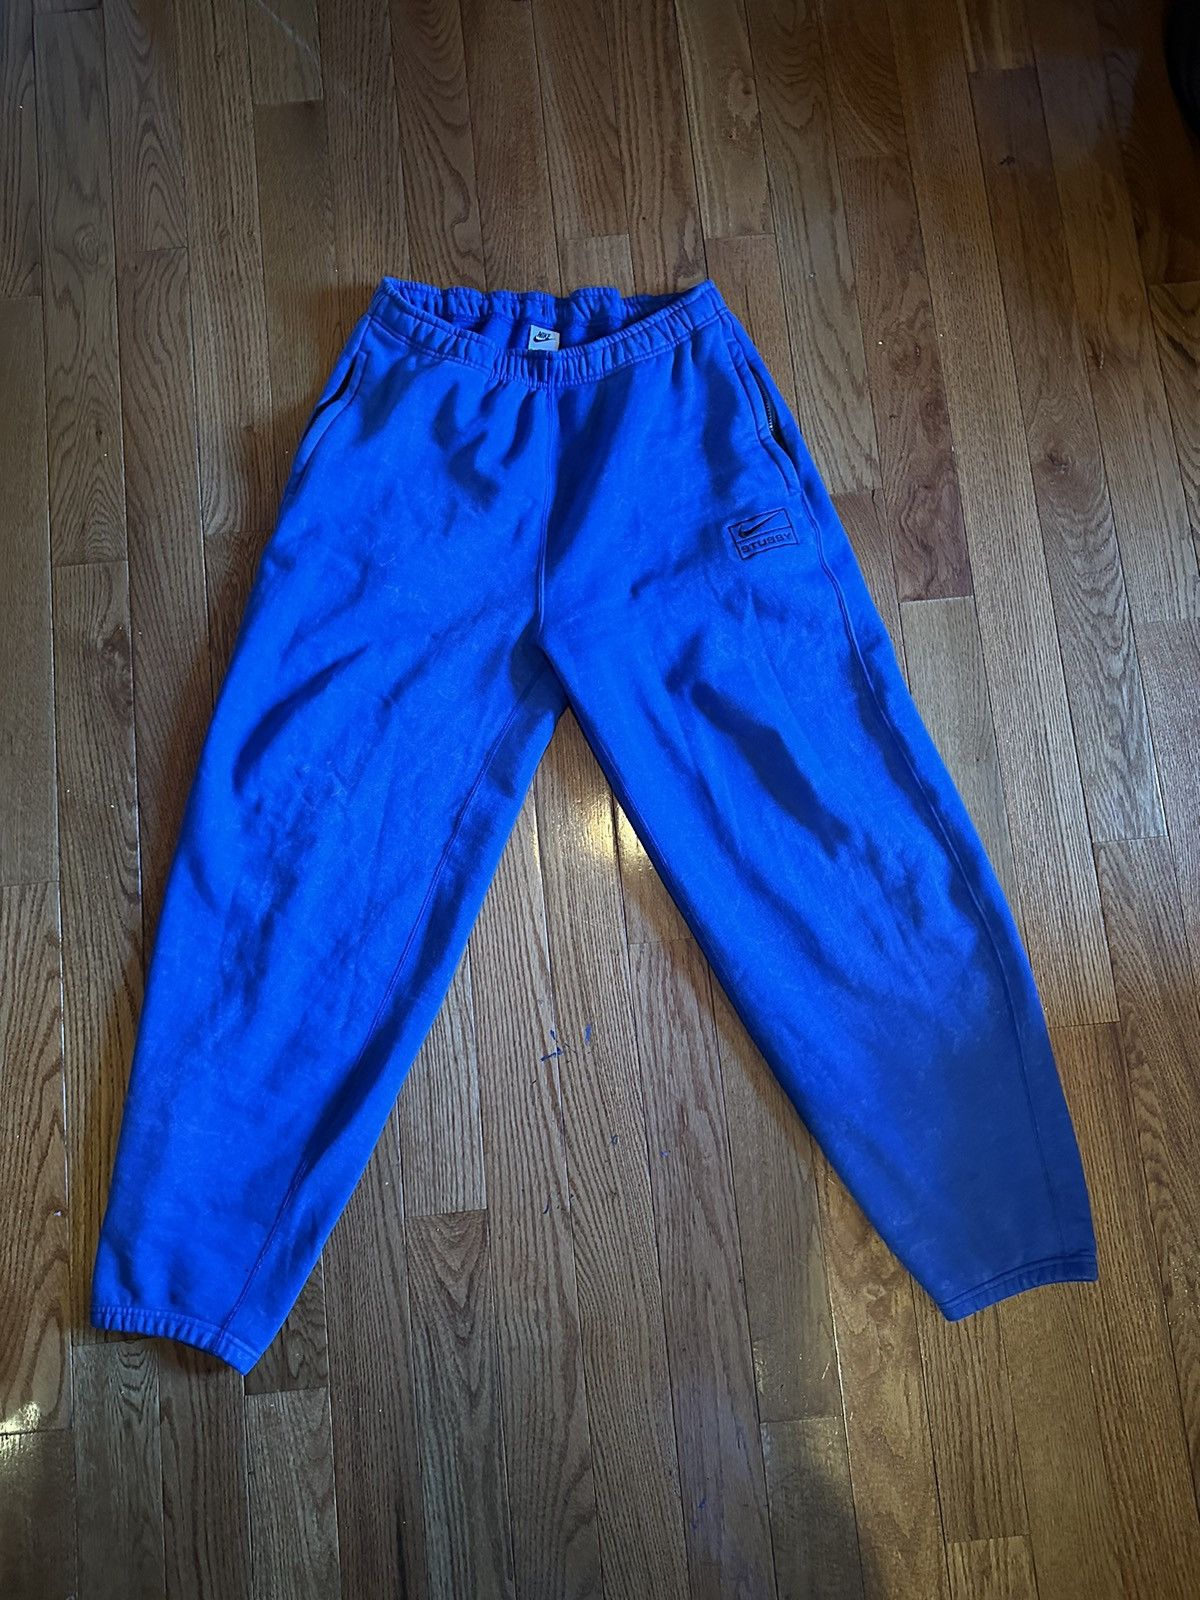 Nike Nike x Stussy Acid Wash Blue Pants | Grailed